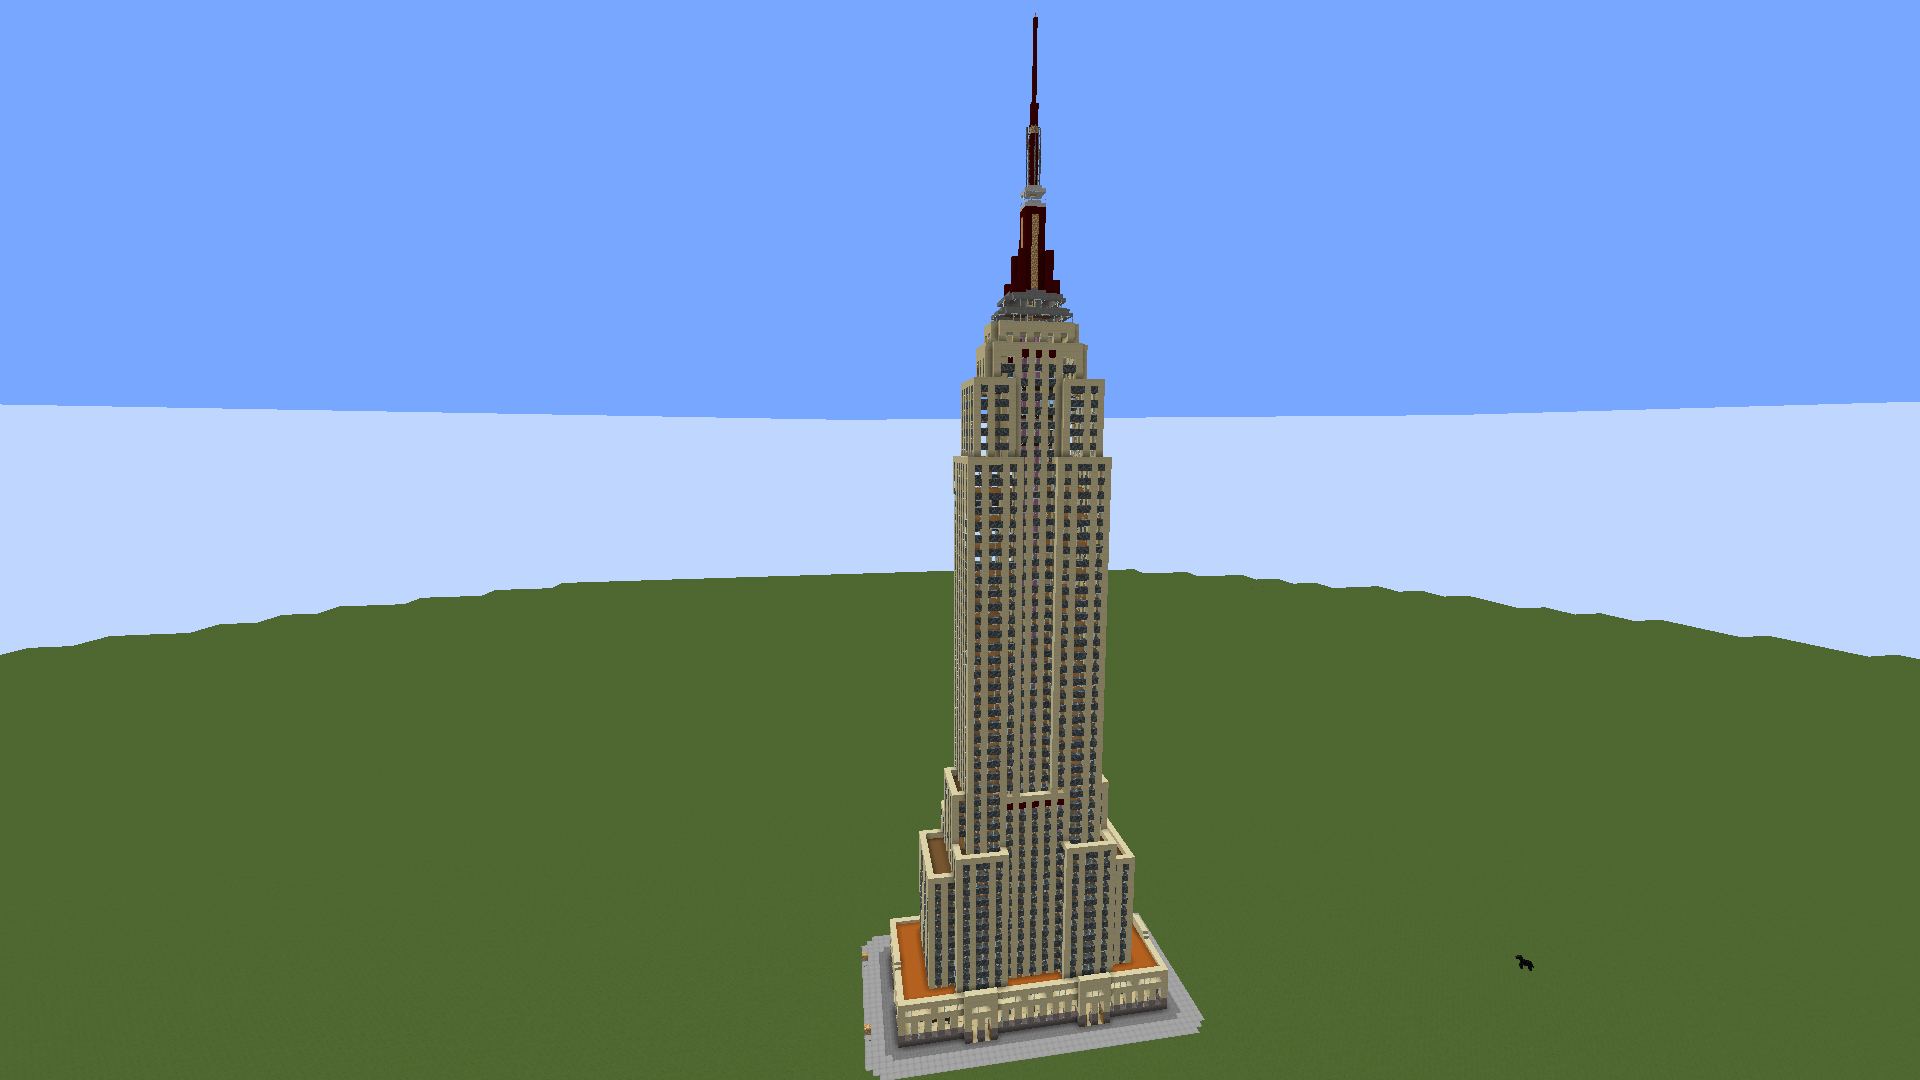 Minecract Empire State Building schematic (litematic)